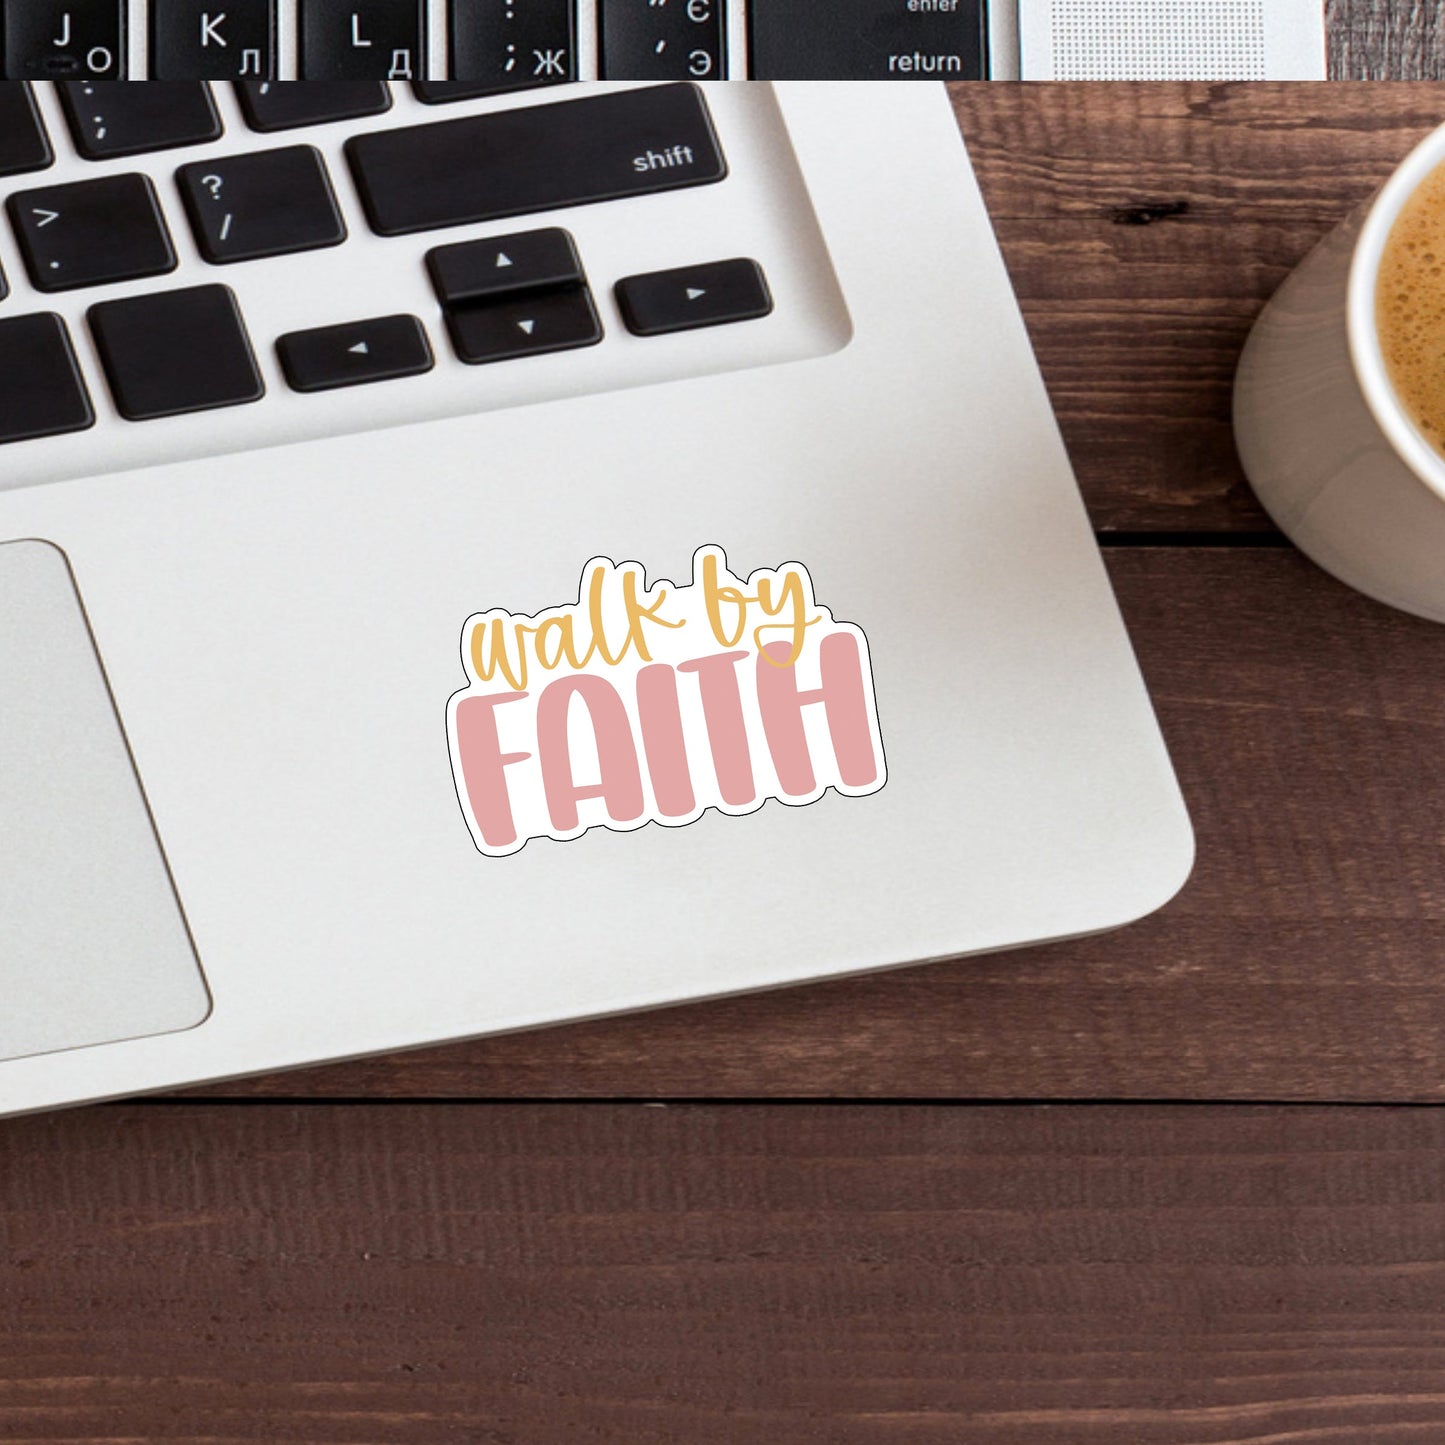 walk-by-faith-sticker,Stickers - Religious